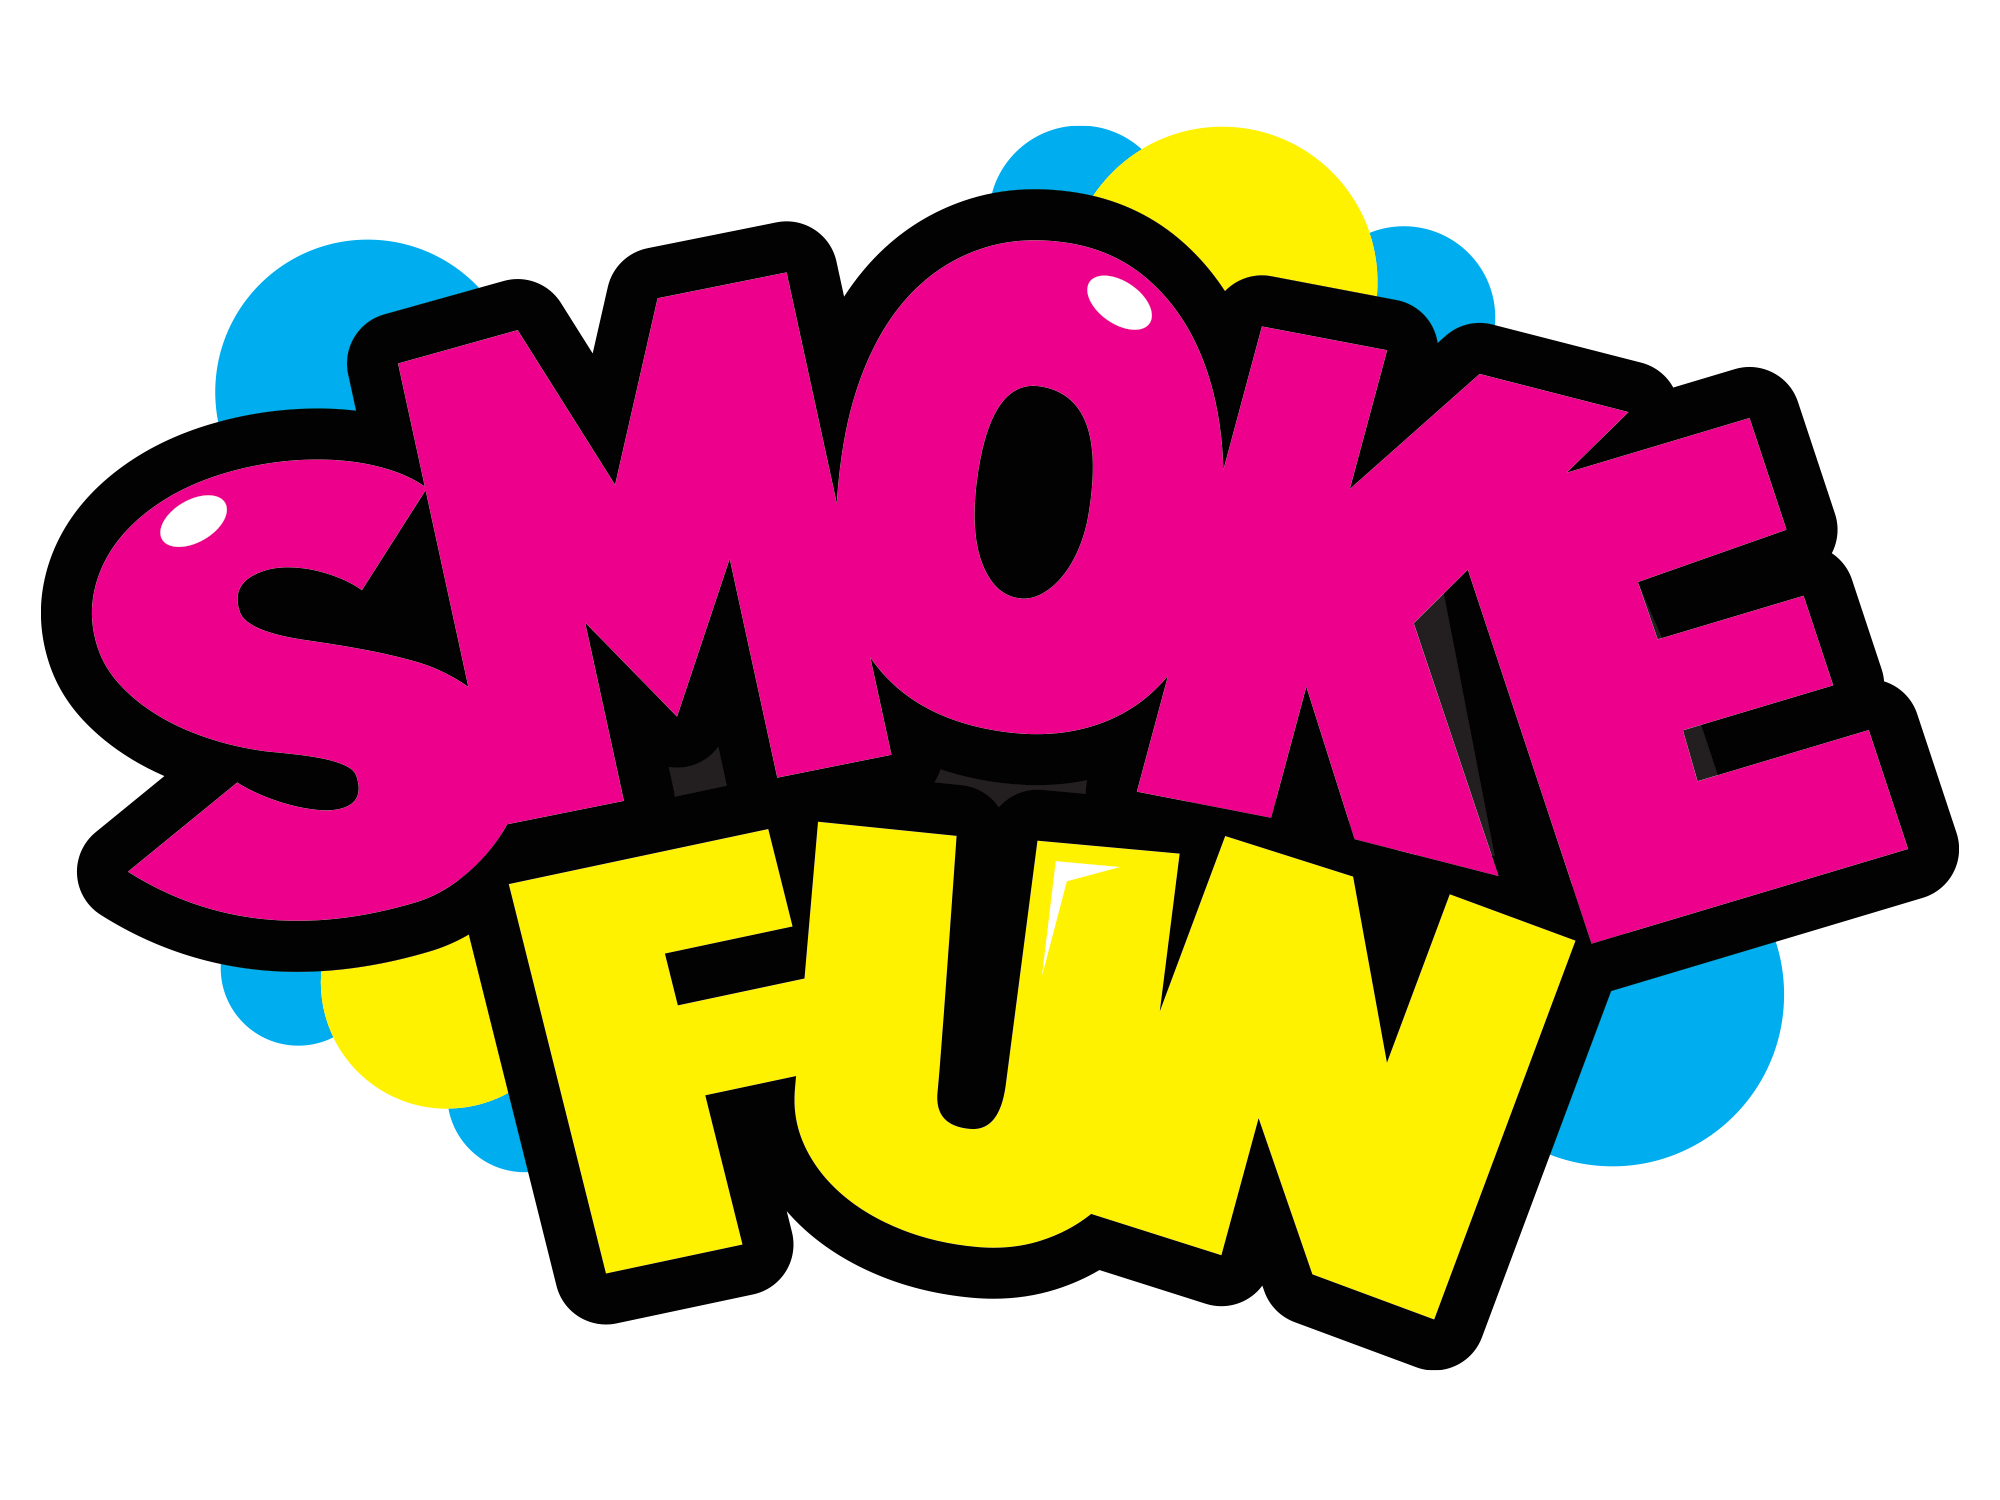 Smoke Fun